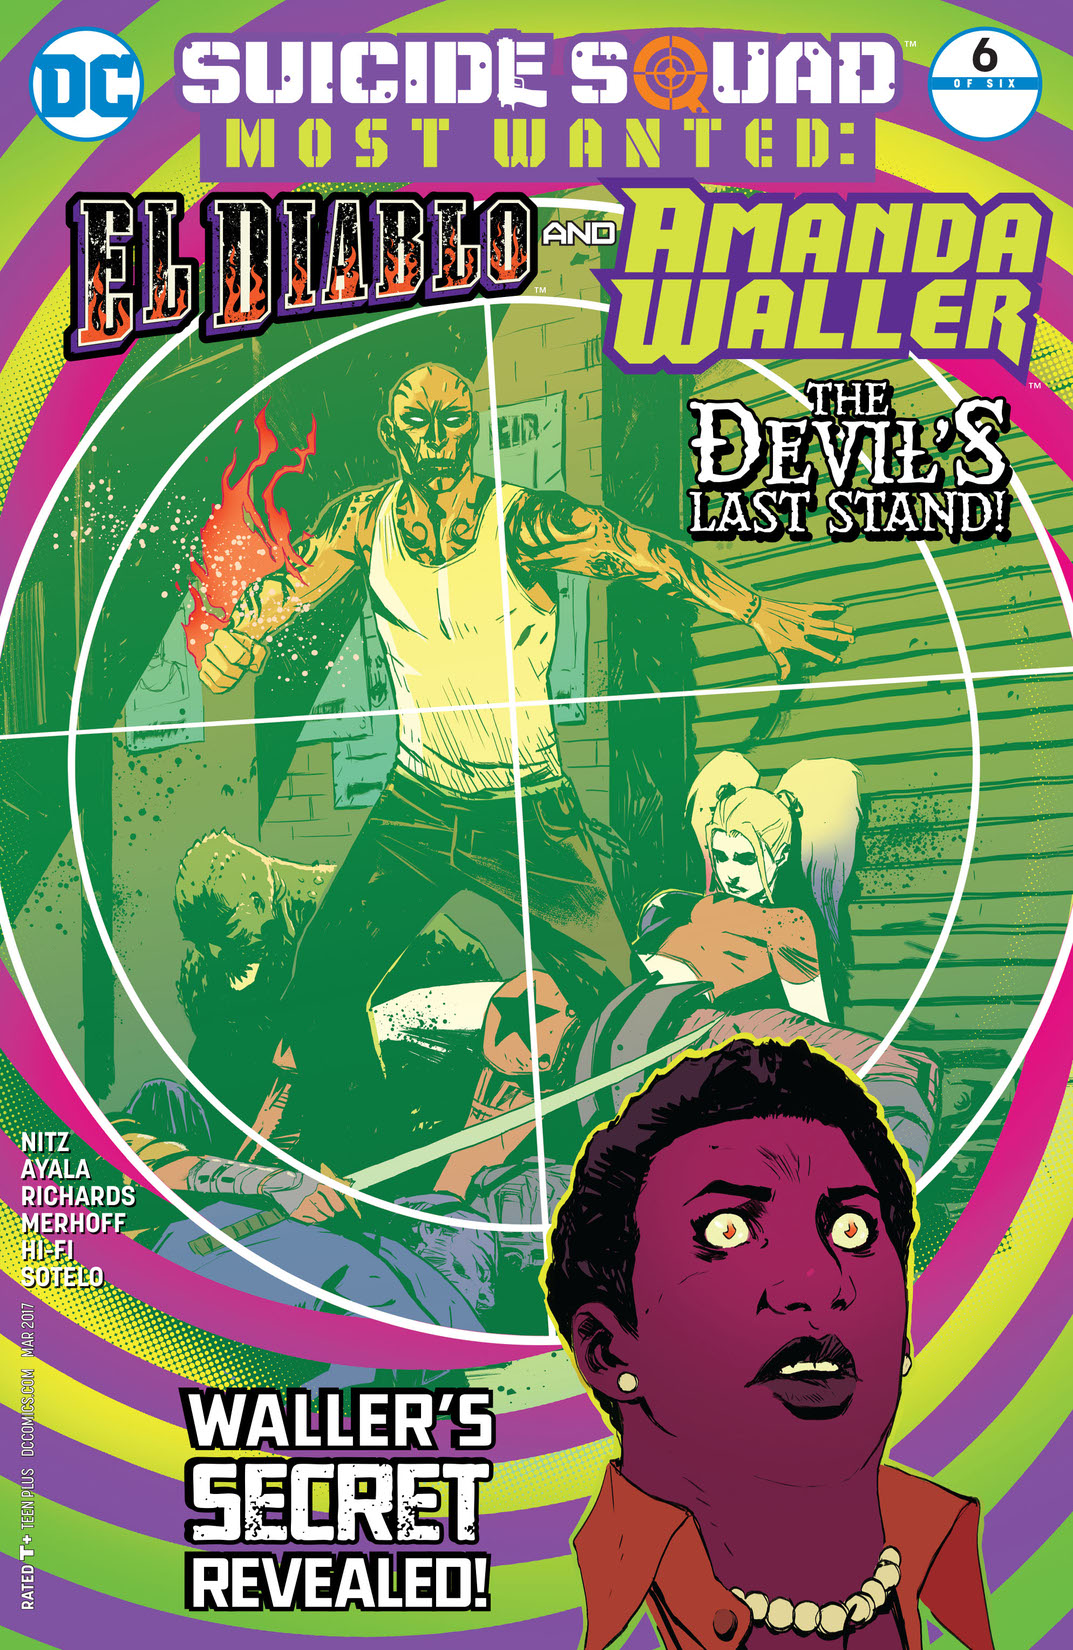 Suicide Squad Most Wanted: El Diablo and Amanda Waller #6 preview images